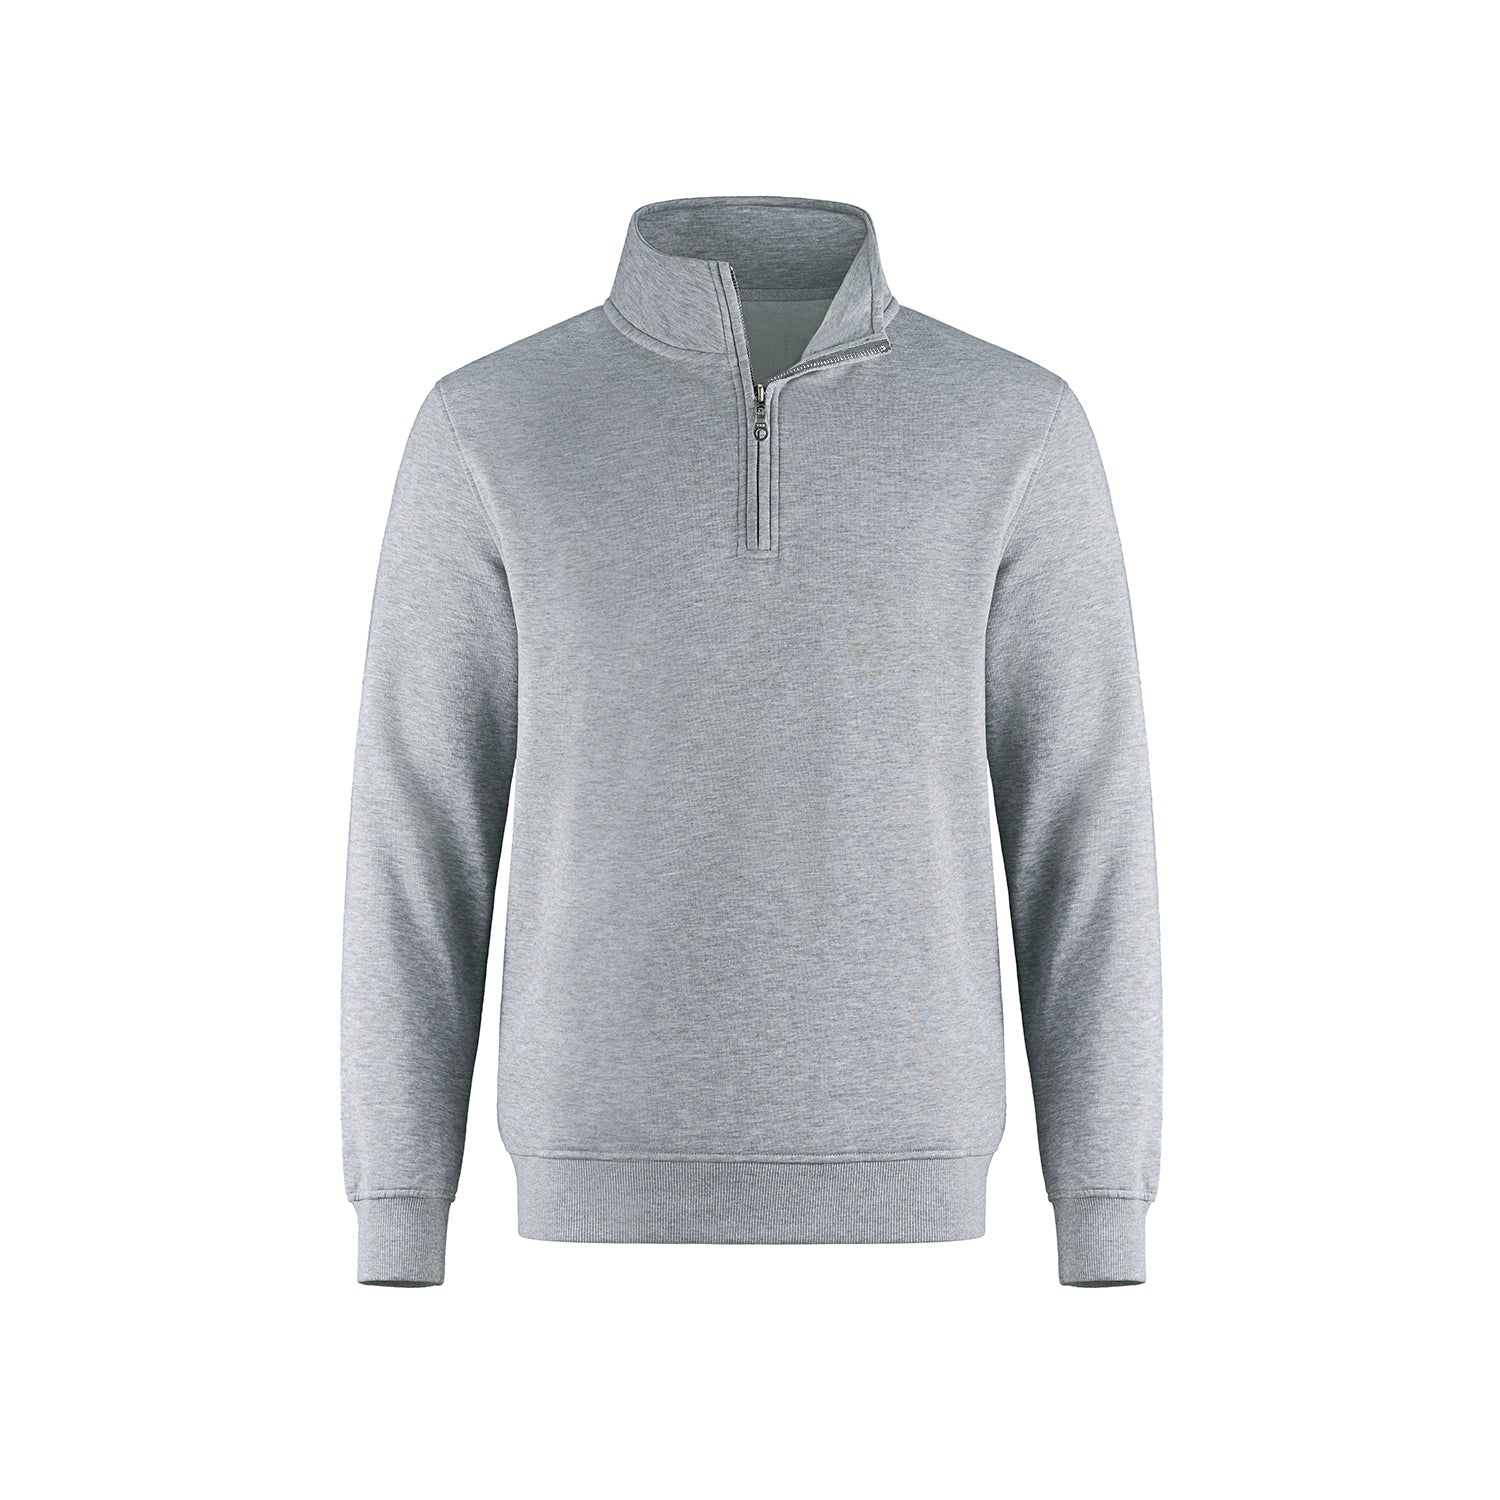 L00545 - Flux - 1/4 zip Pullover - Athletic Grey Heather